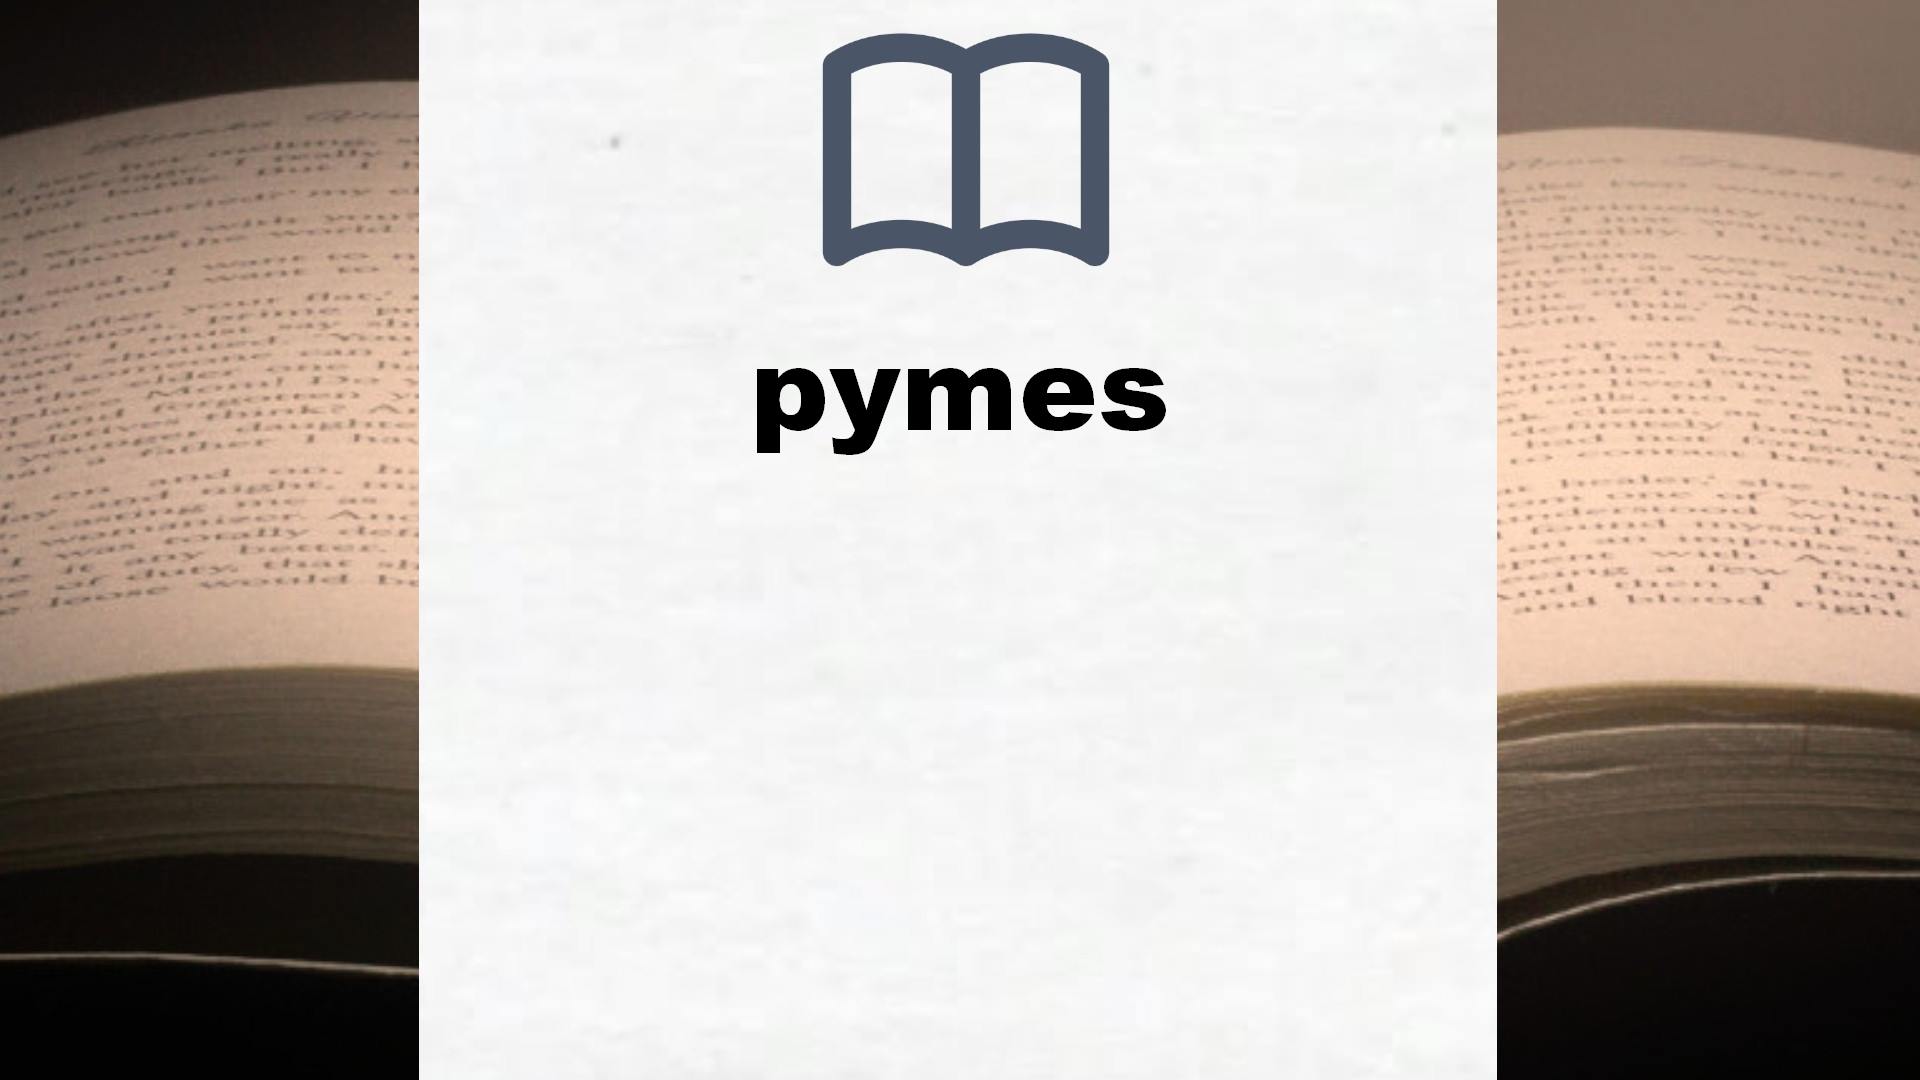 Libros sobre pymes